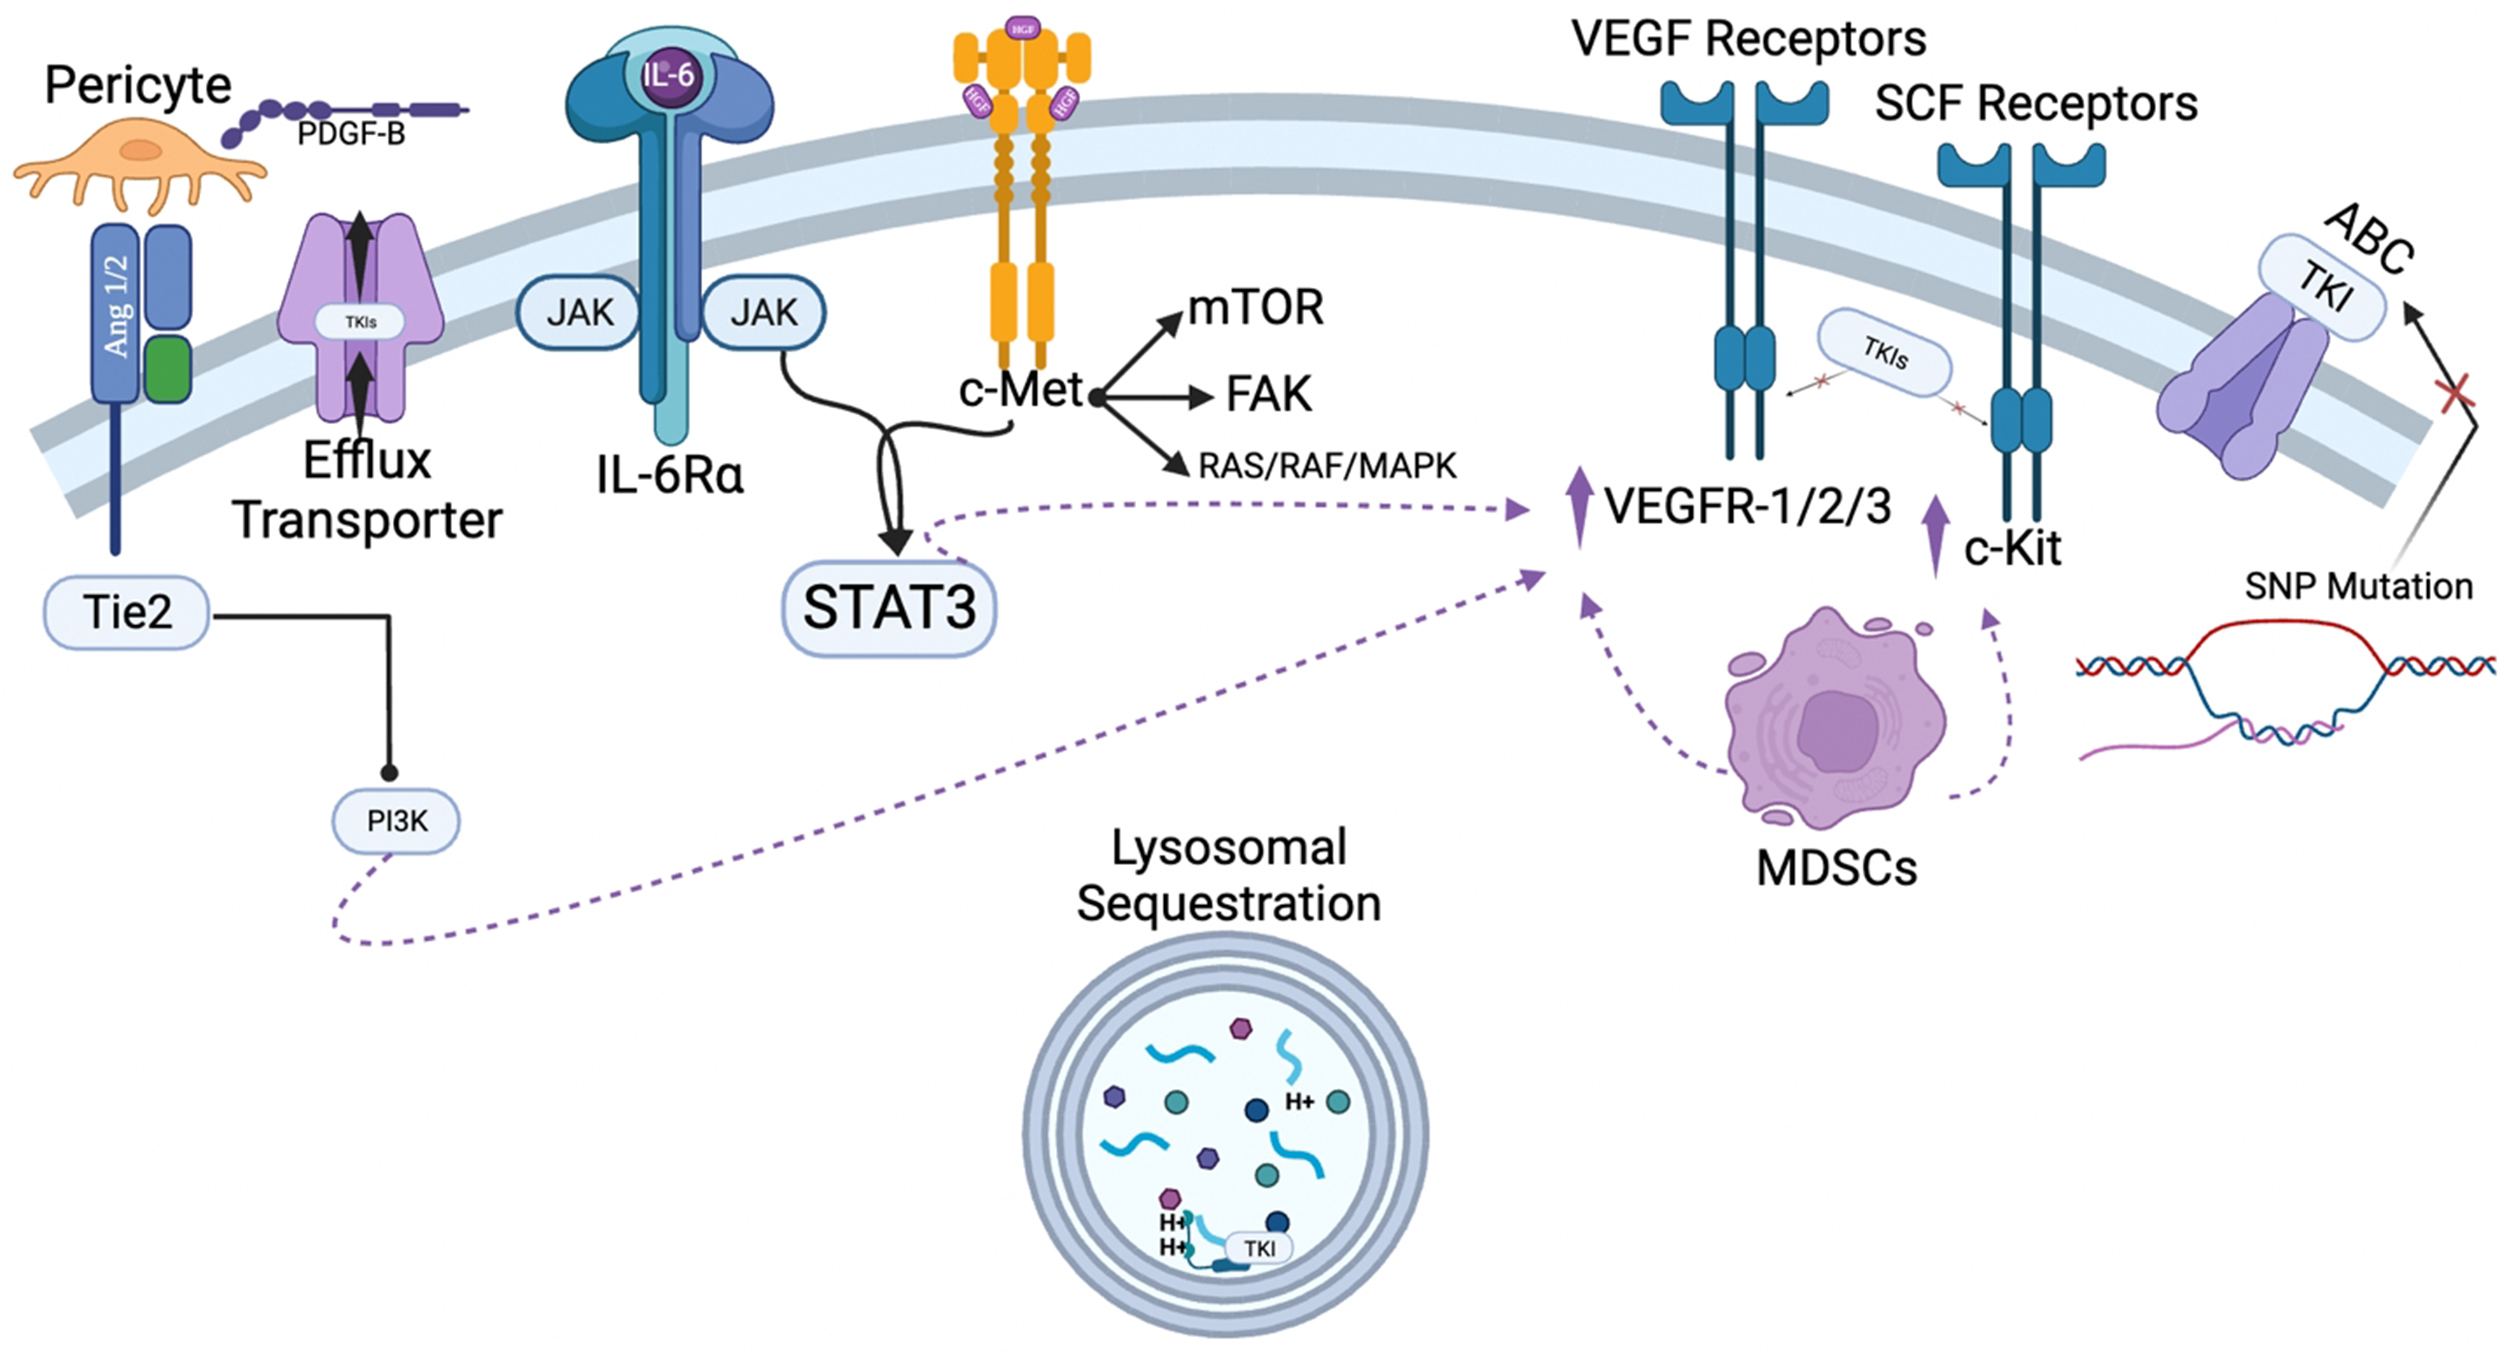 Mechanisms of tyrosine kinase inhibitor resistance in renal cell carcinoma